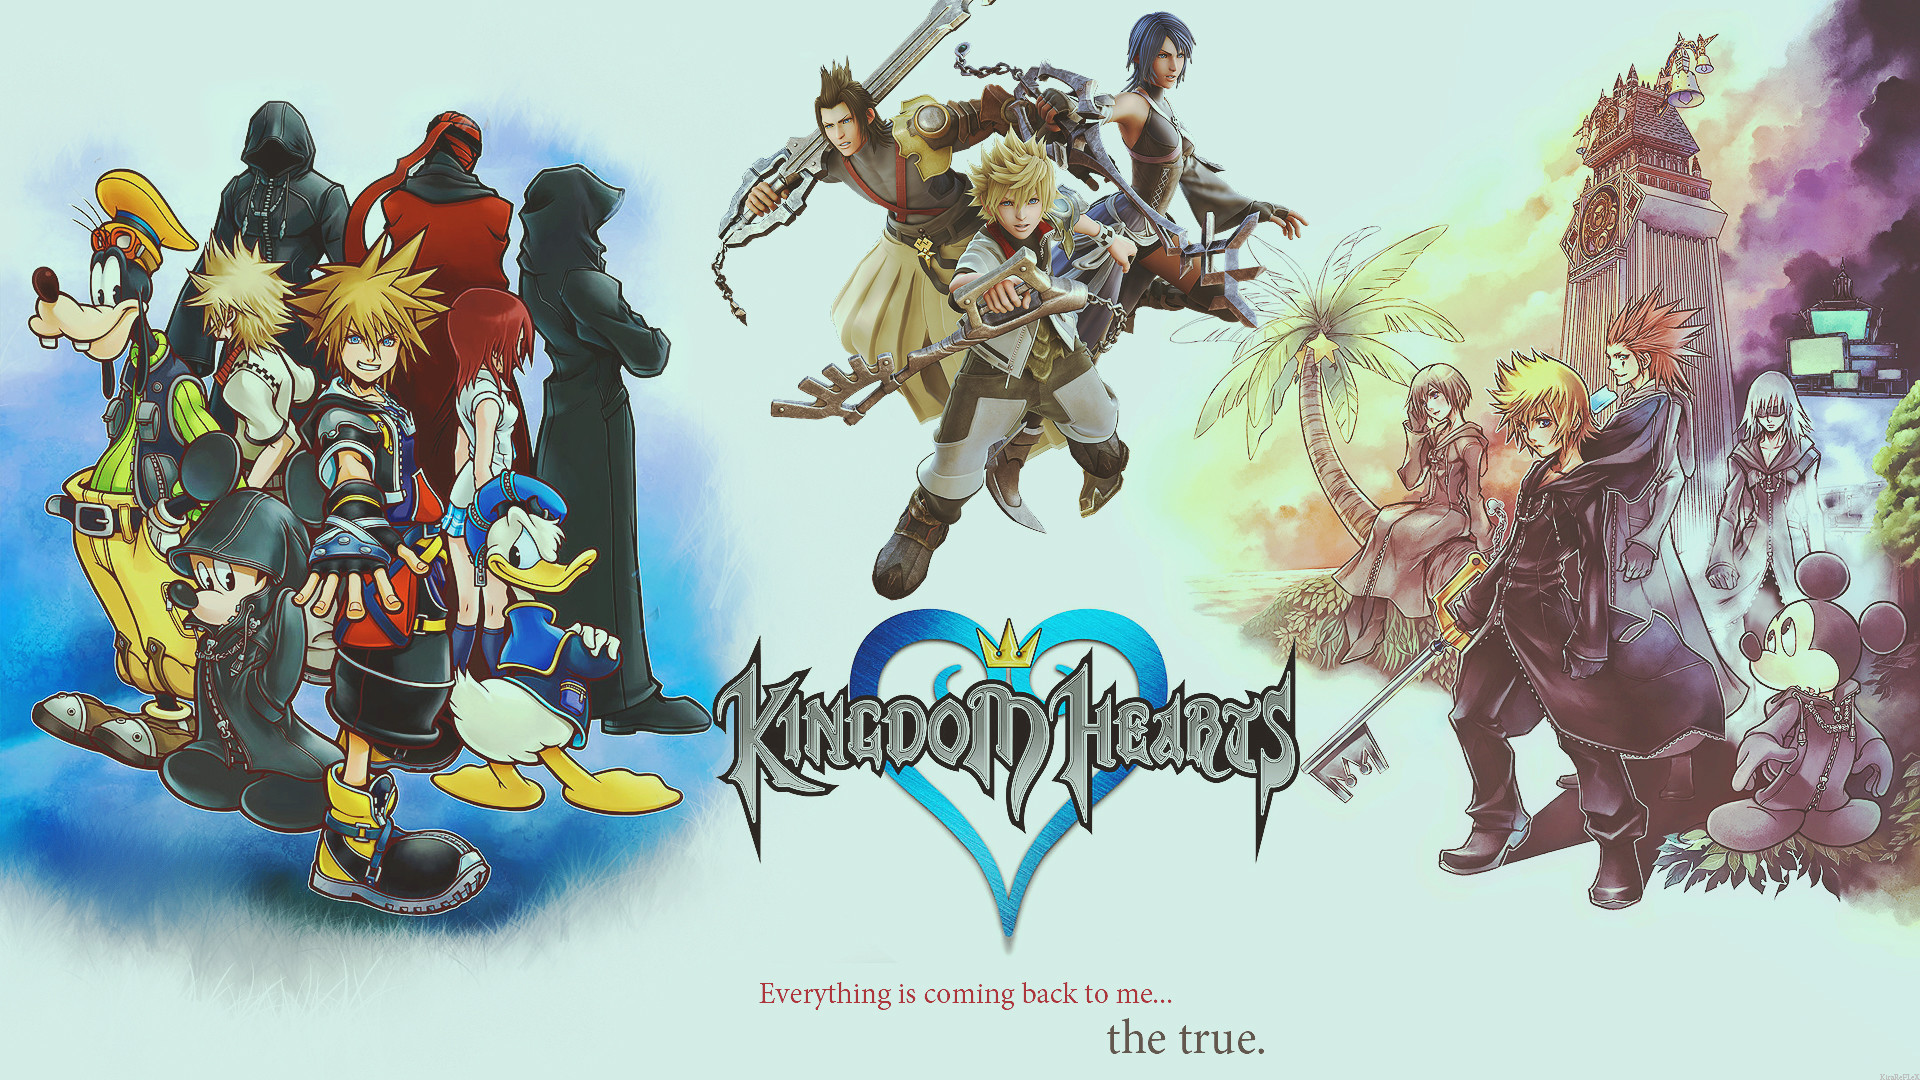 1920x1080 Kingdom Hearts 358/2 background - KH: Organization XIII Wallpaper ... |  Download Wallpaper | Pinterest